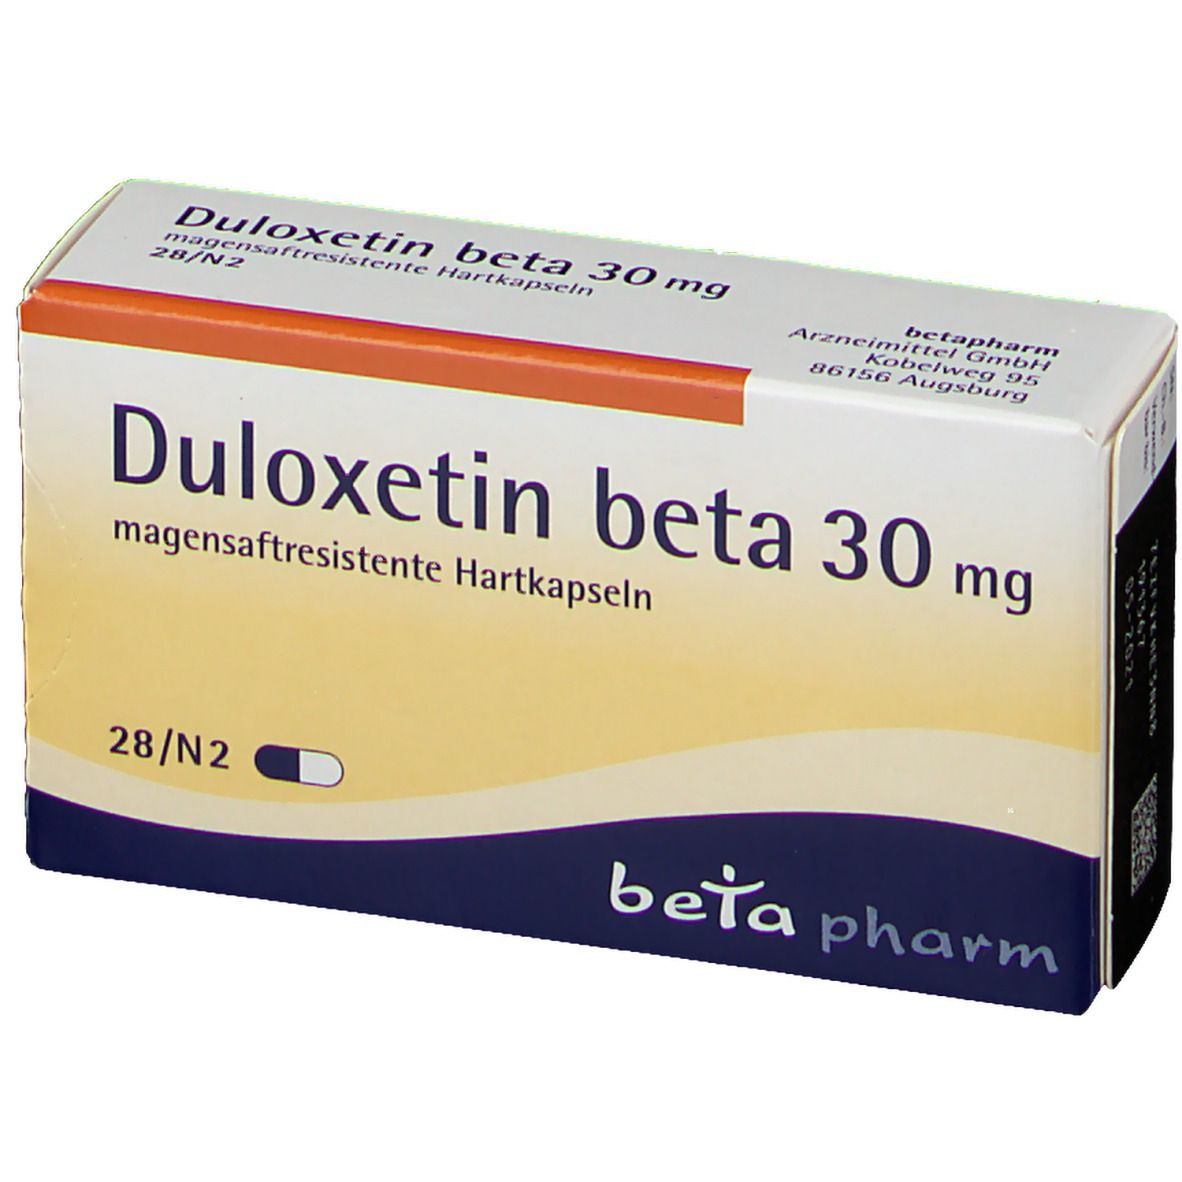 Duloxetin beta 30 mg